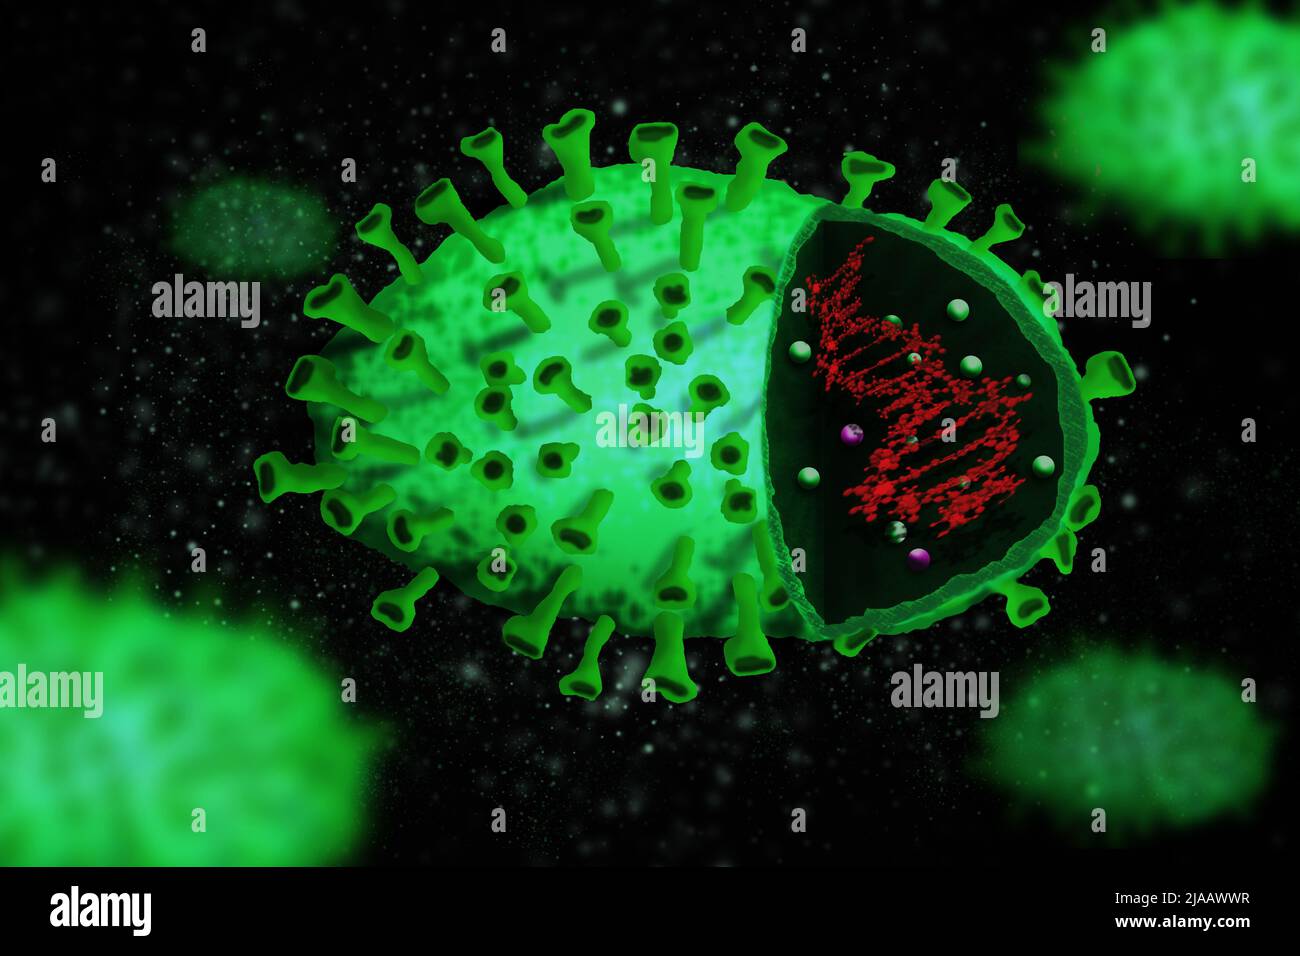 monkeypox virus close up illustration Stock Photo